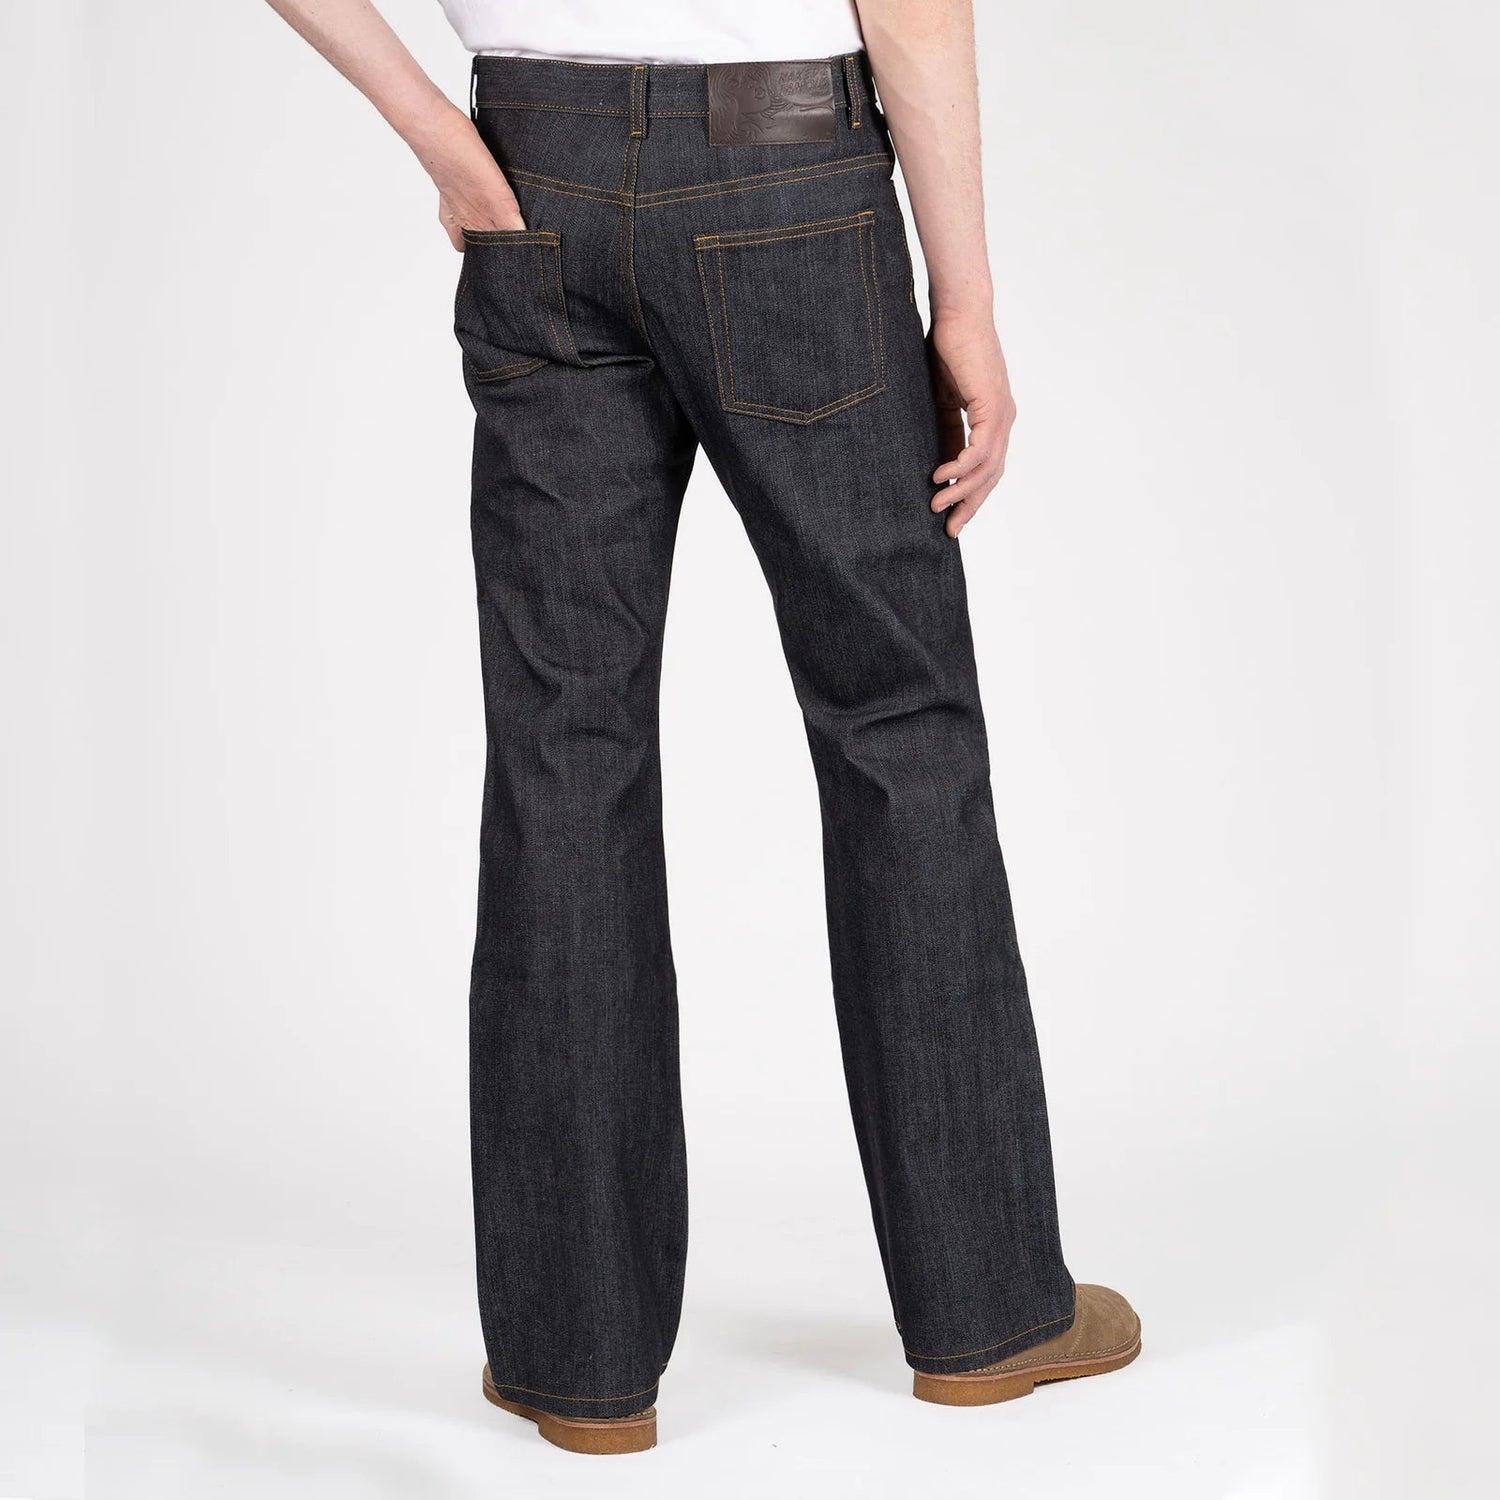 Groovy Guy - Vintage Jeans